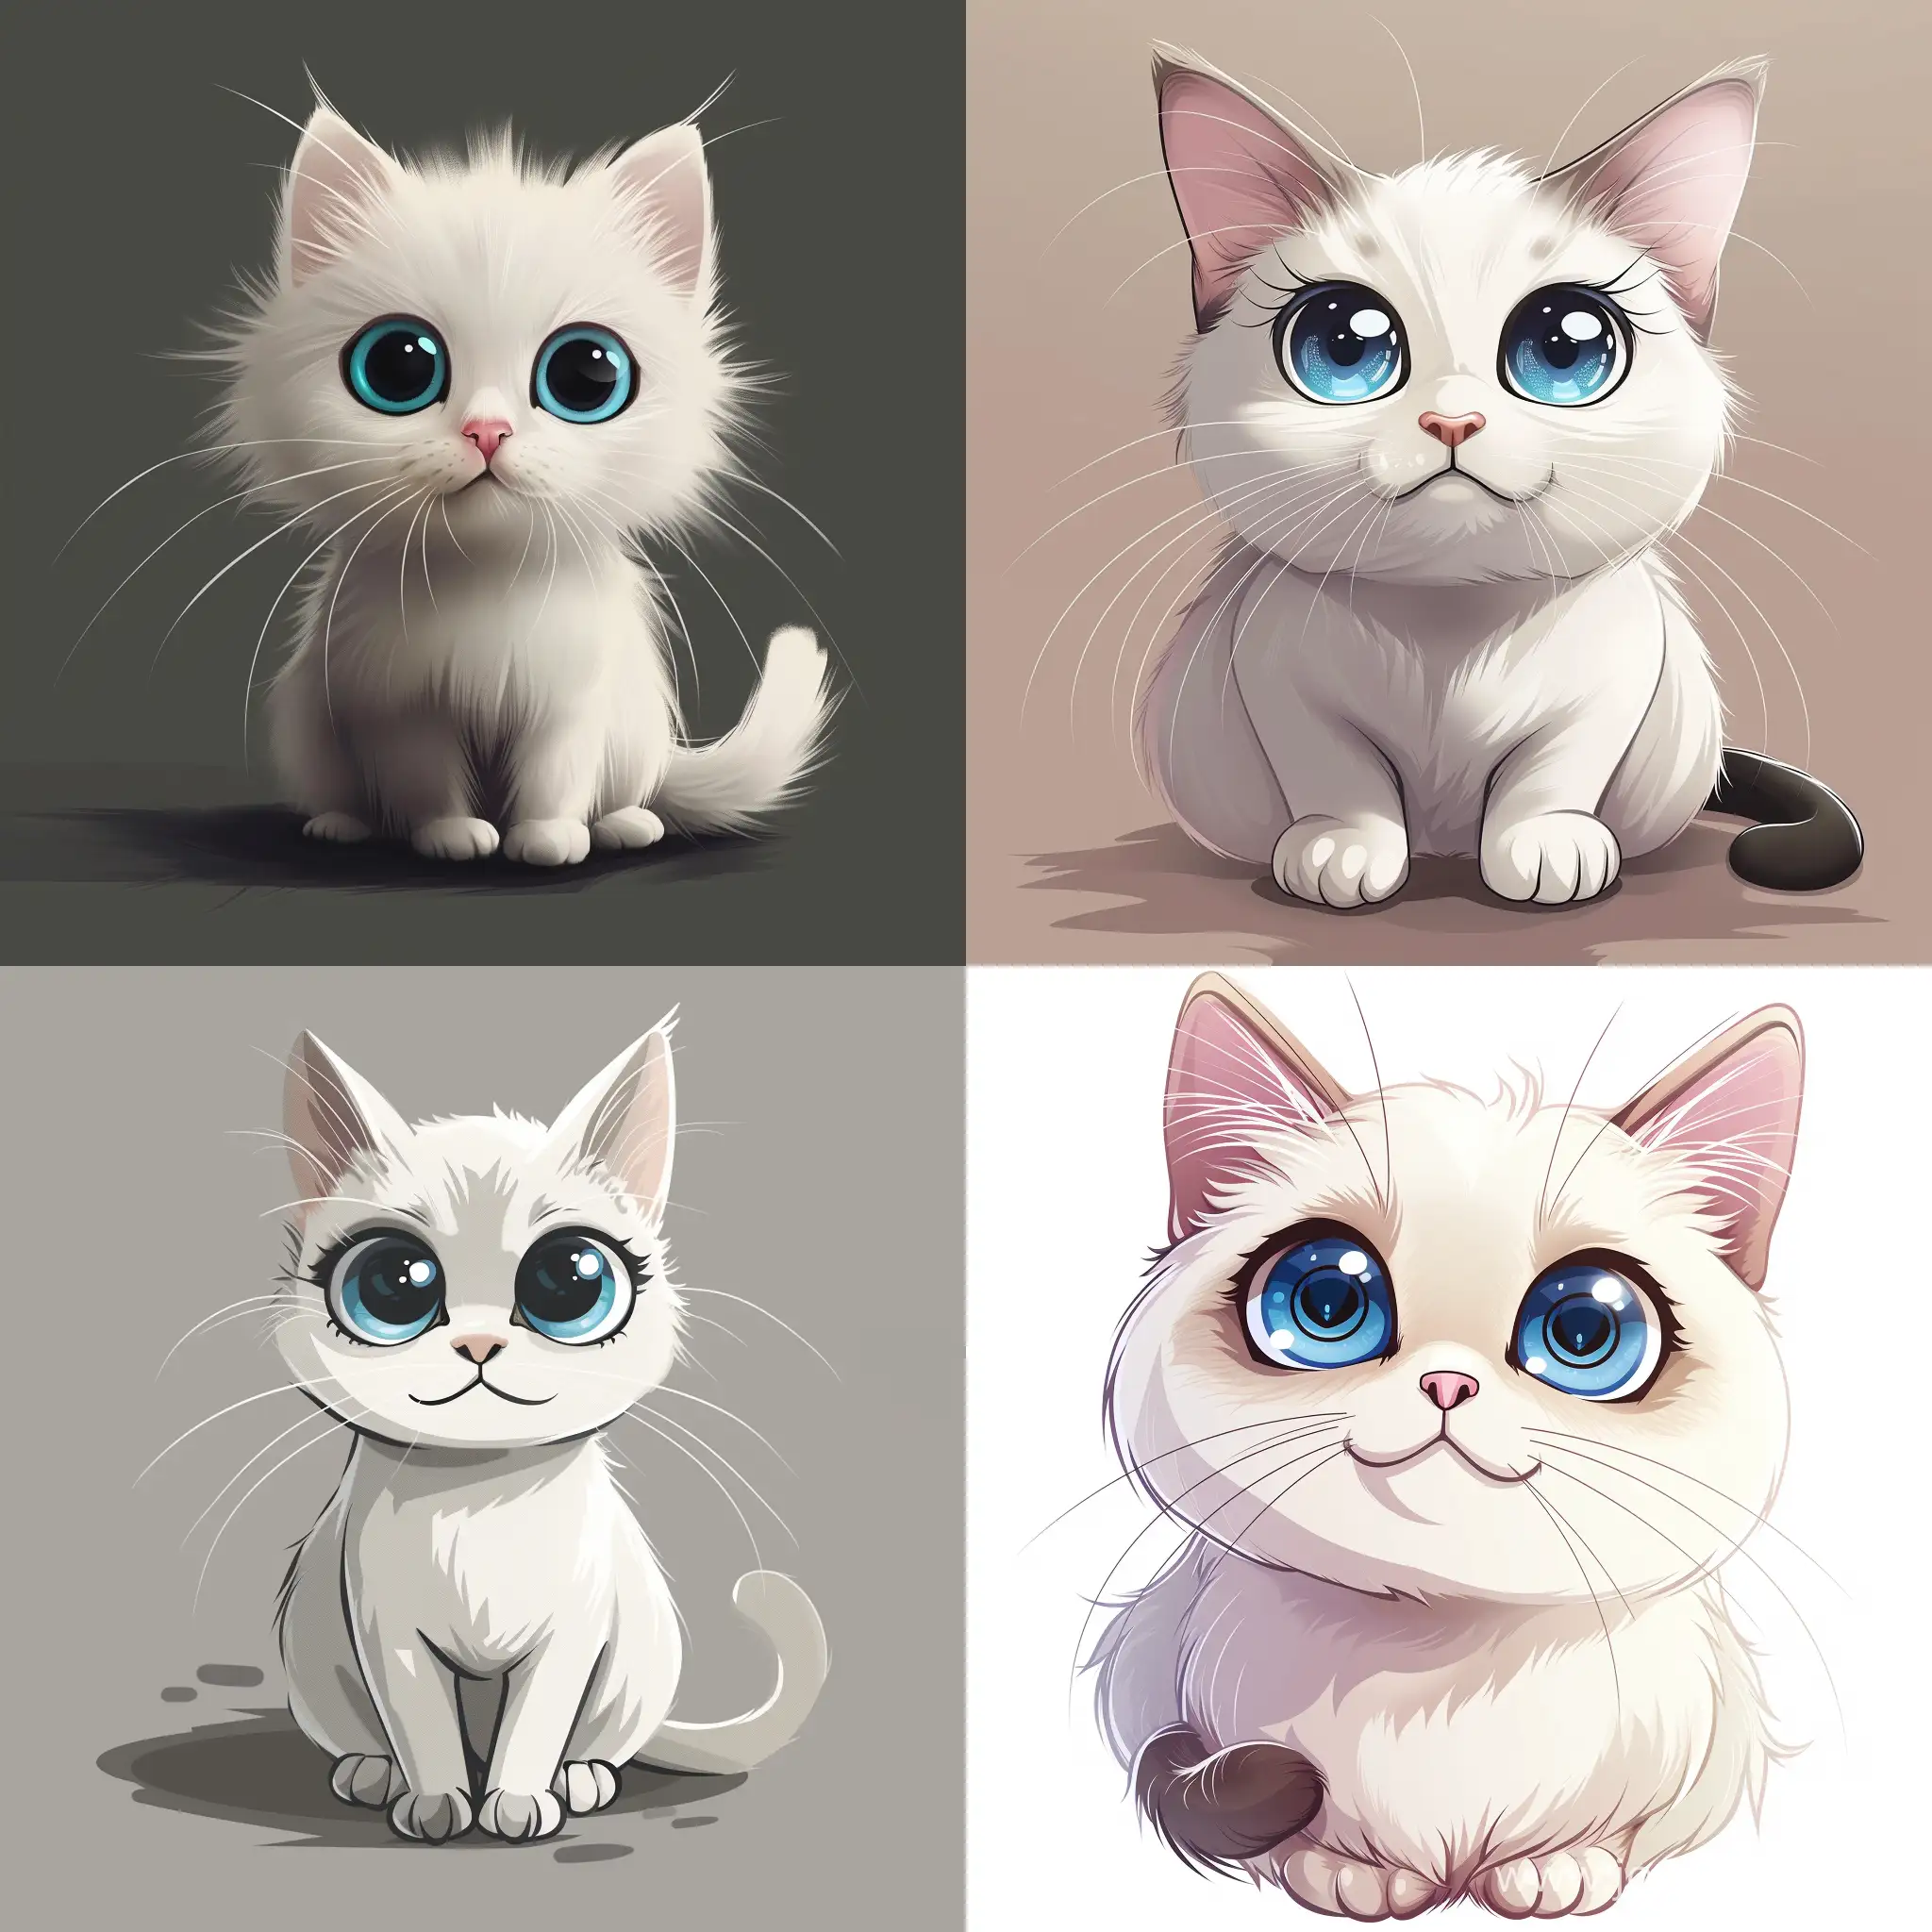 Adorable-White-Scottish-Cat-with-Big-Blue-Eyes